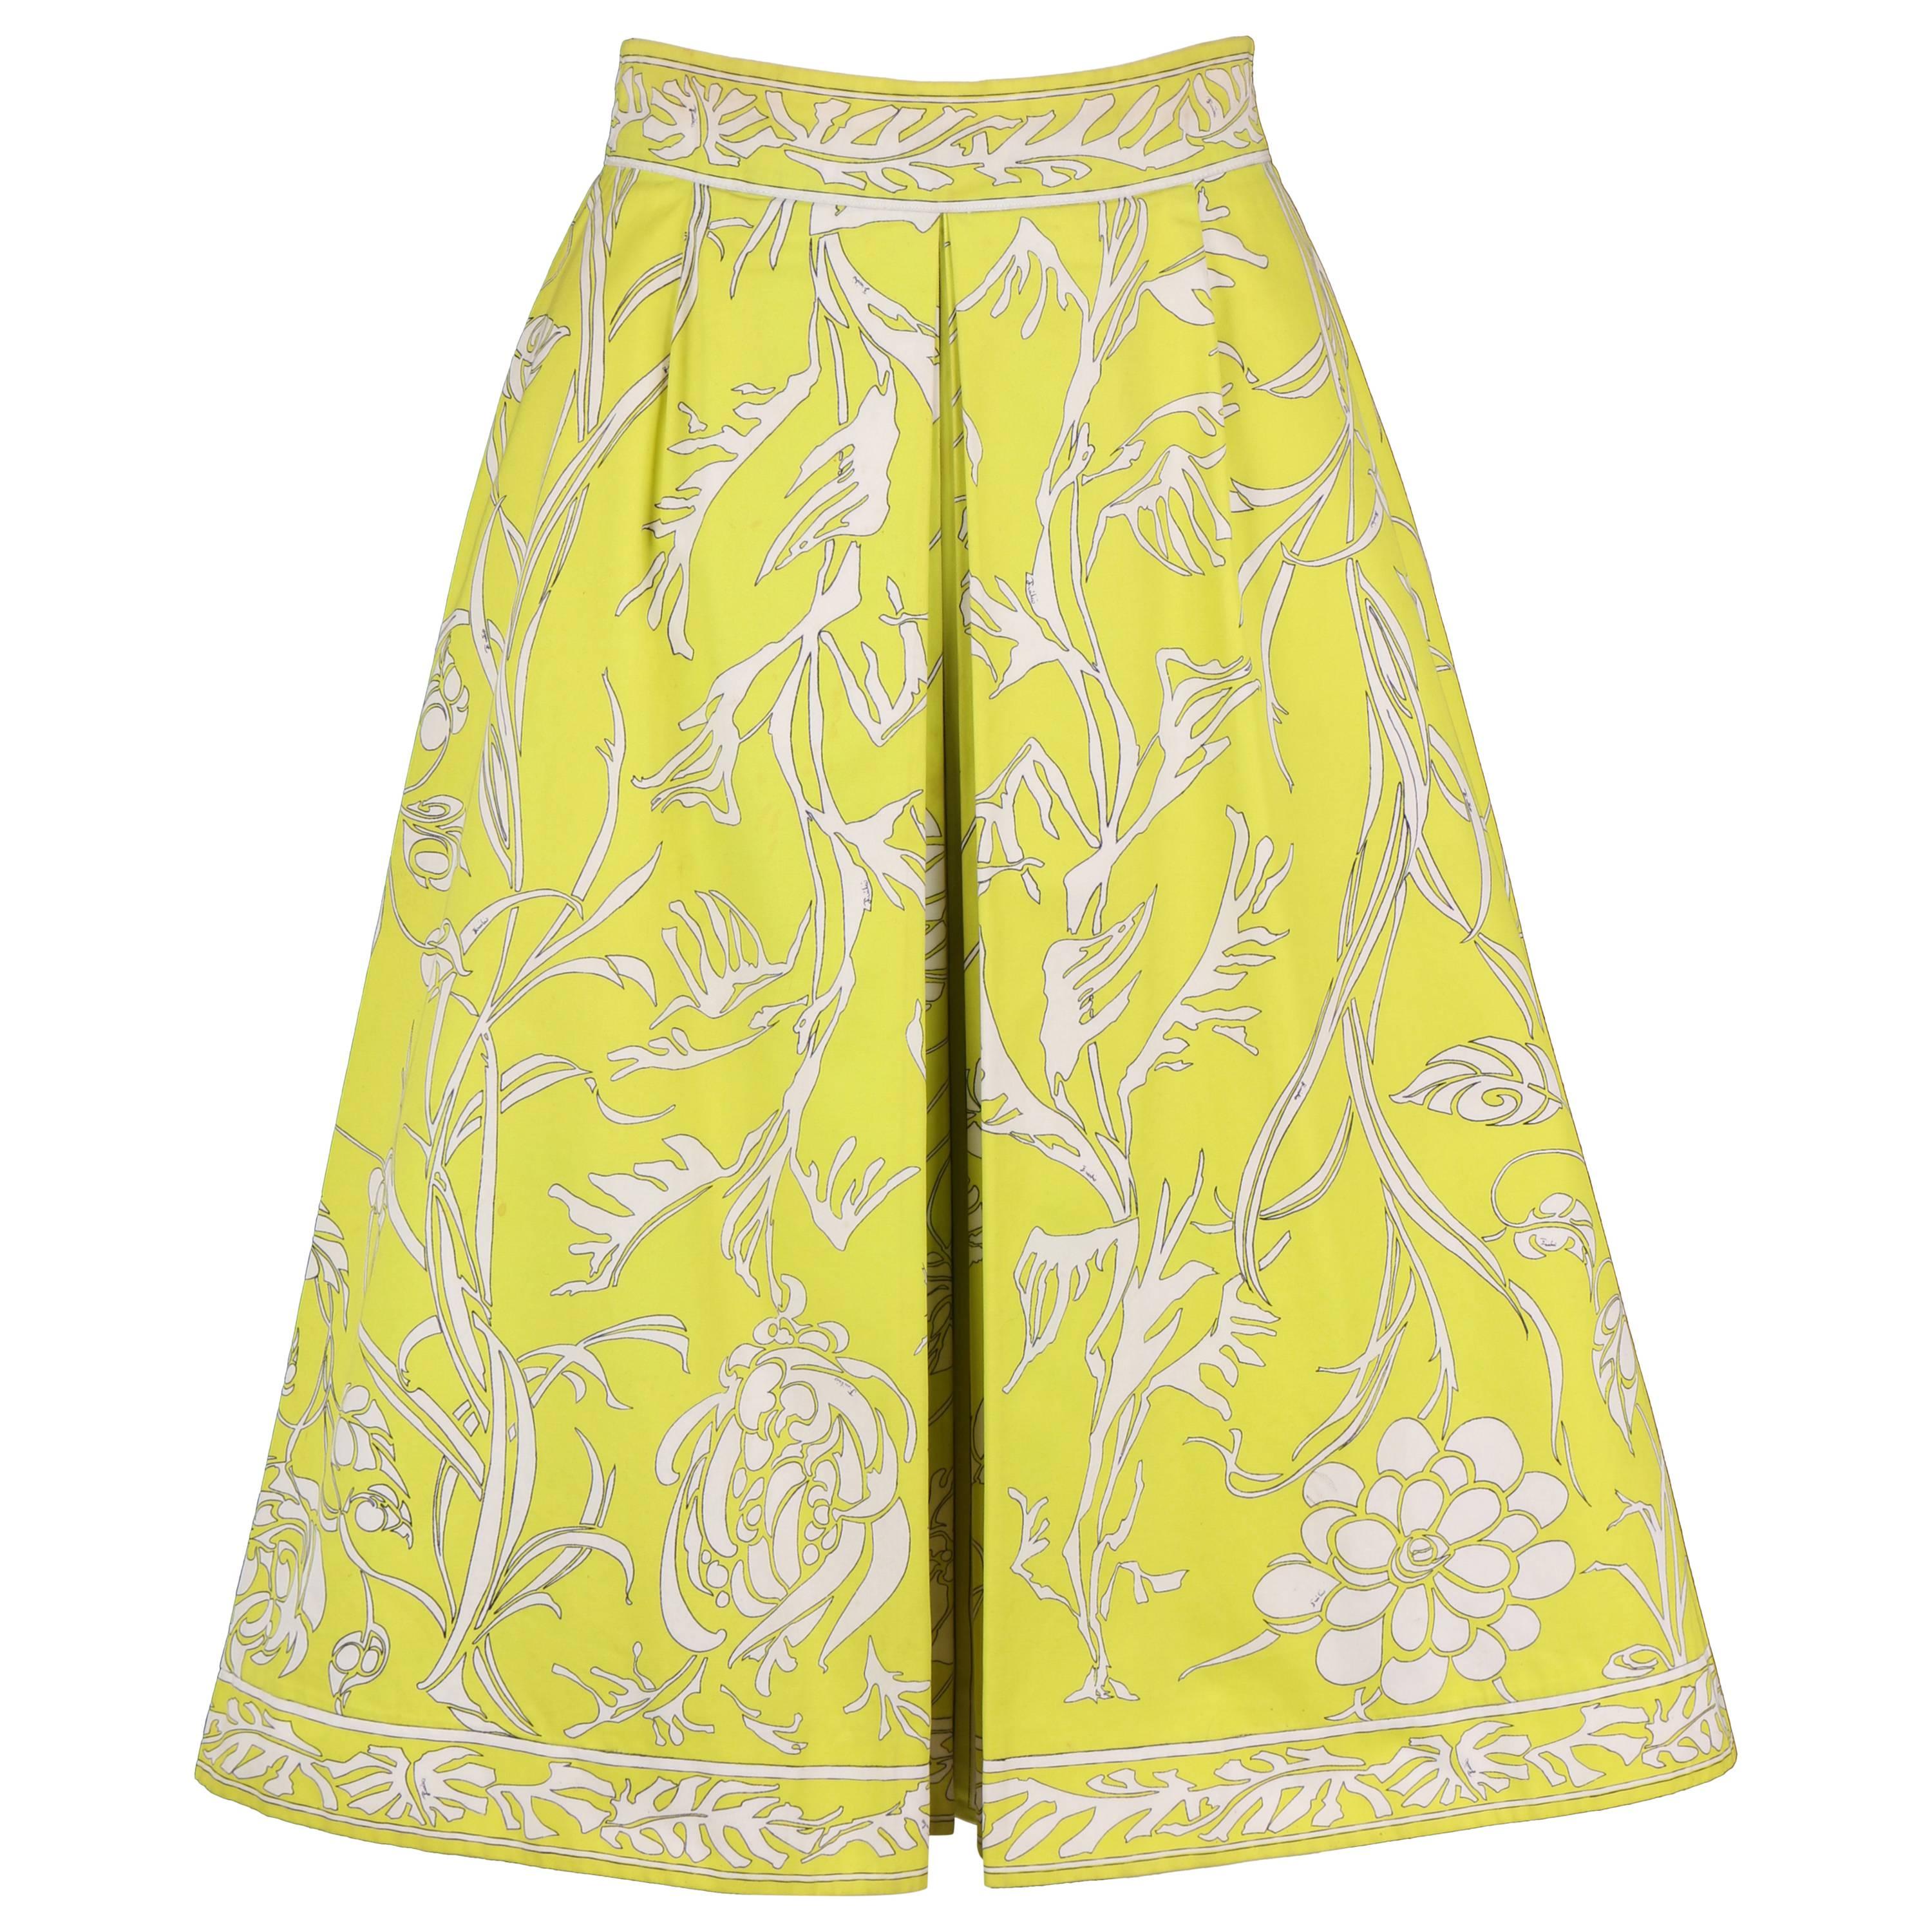 EMILIO PUCCI 1970s Chartreuse Floral Motif Print Cotton Pleated Skirt Size 8